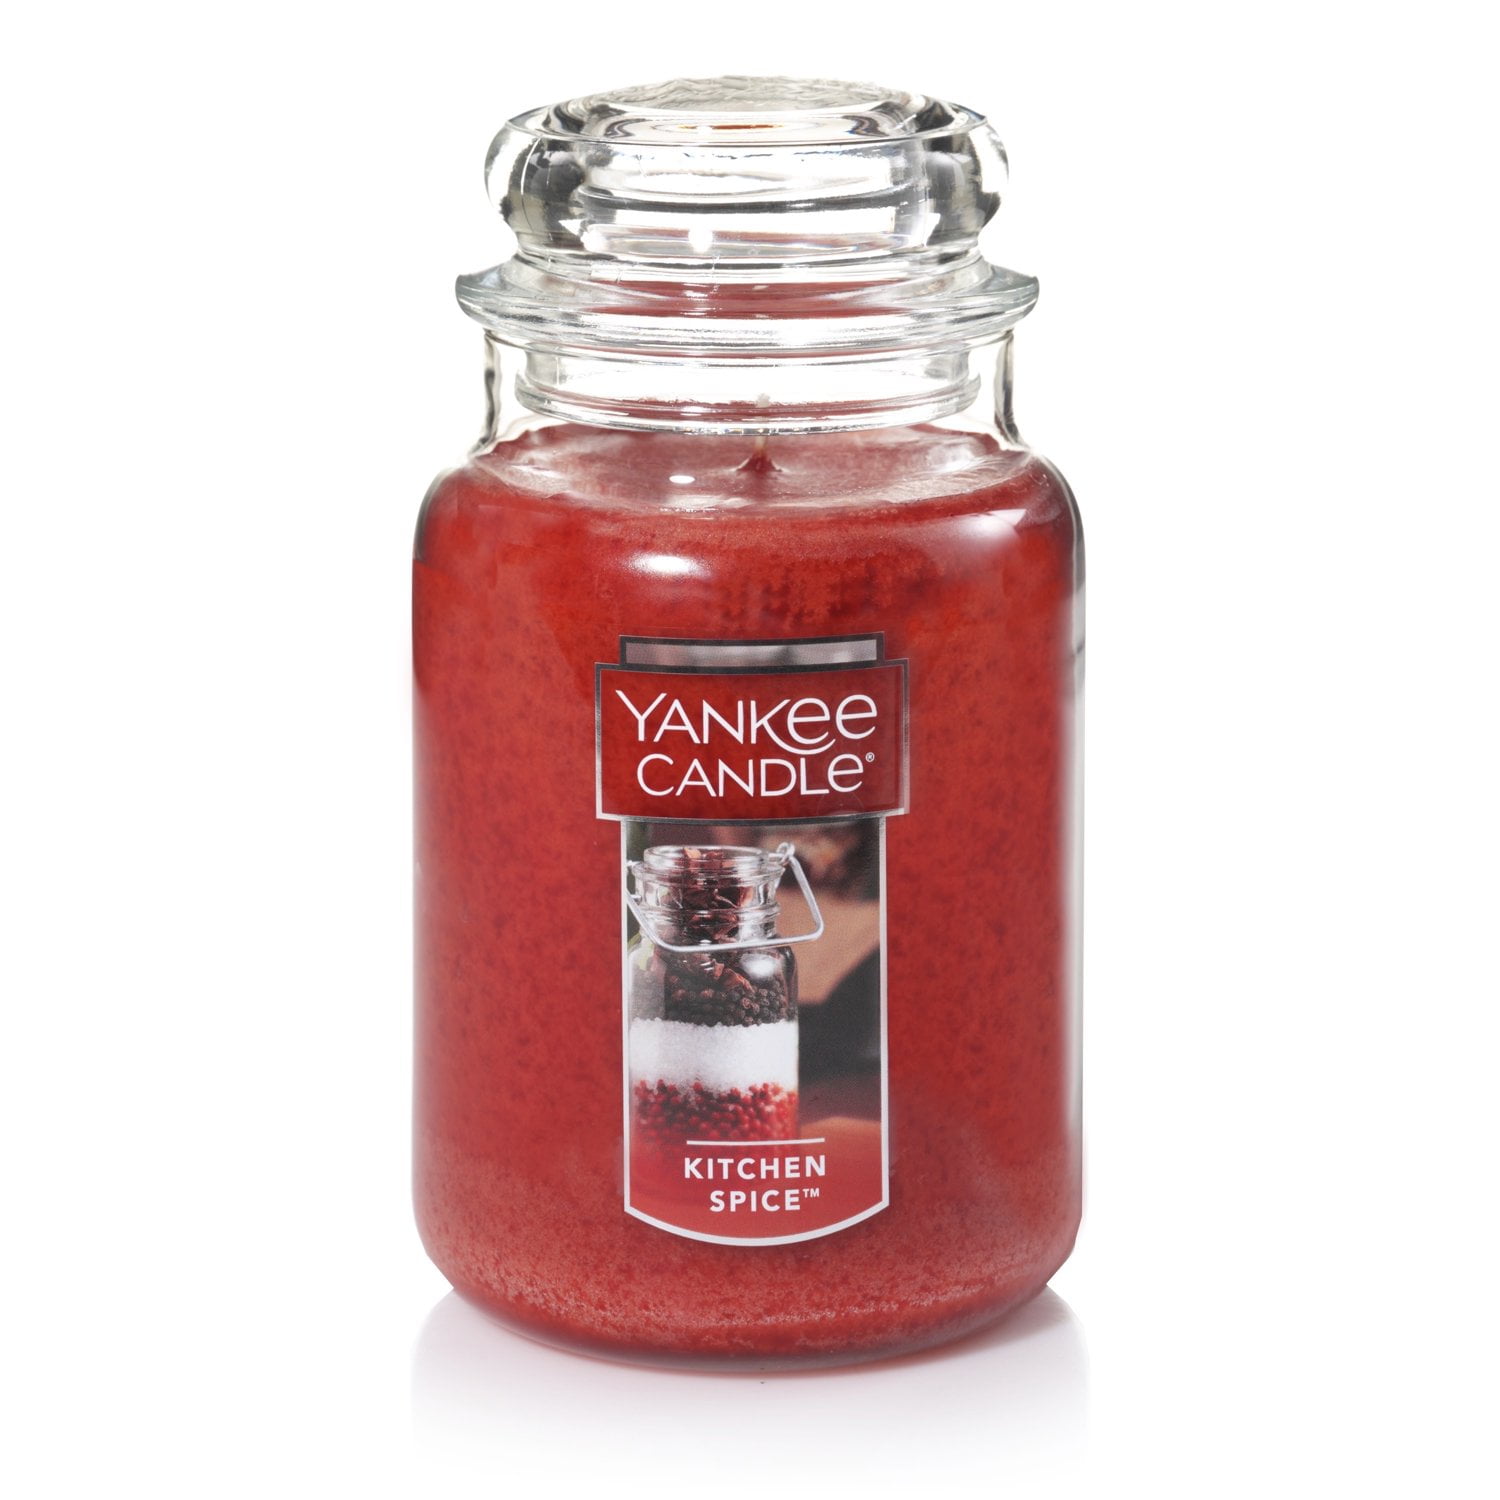  YANKEE CANDLE Vanilla Large Jar Candle, White : Home & Kitchen